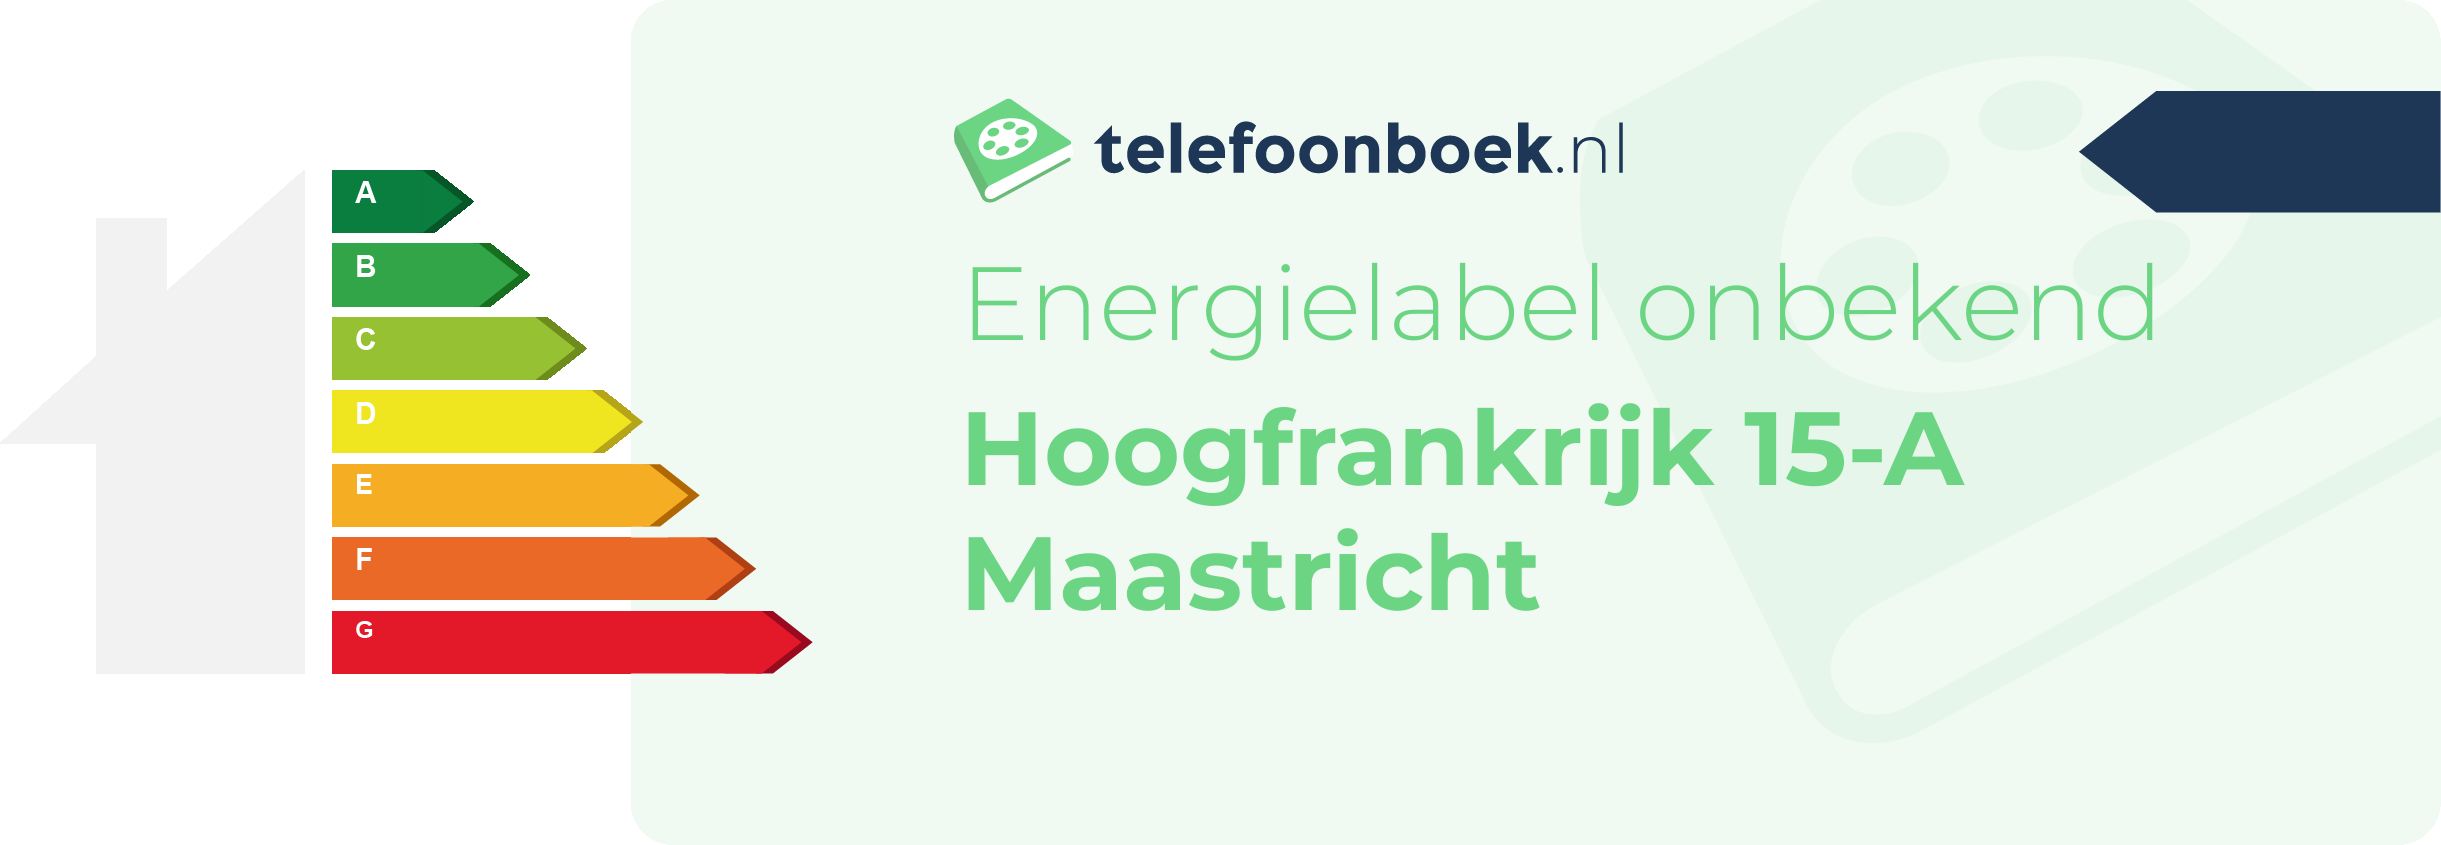 Energielabel Hoogfrankrijk 15-A Maastricht